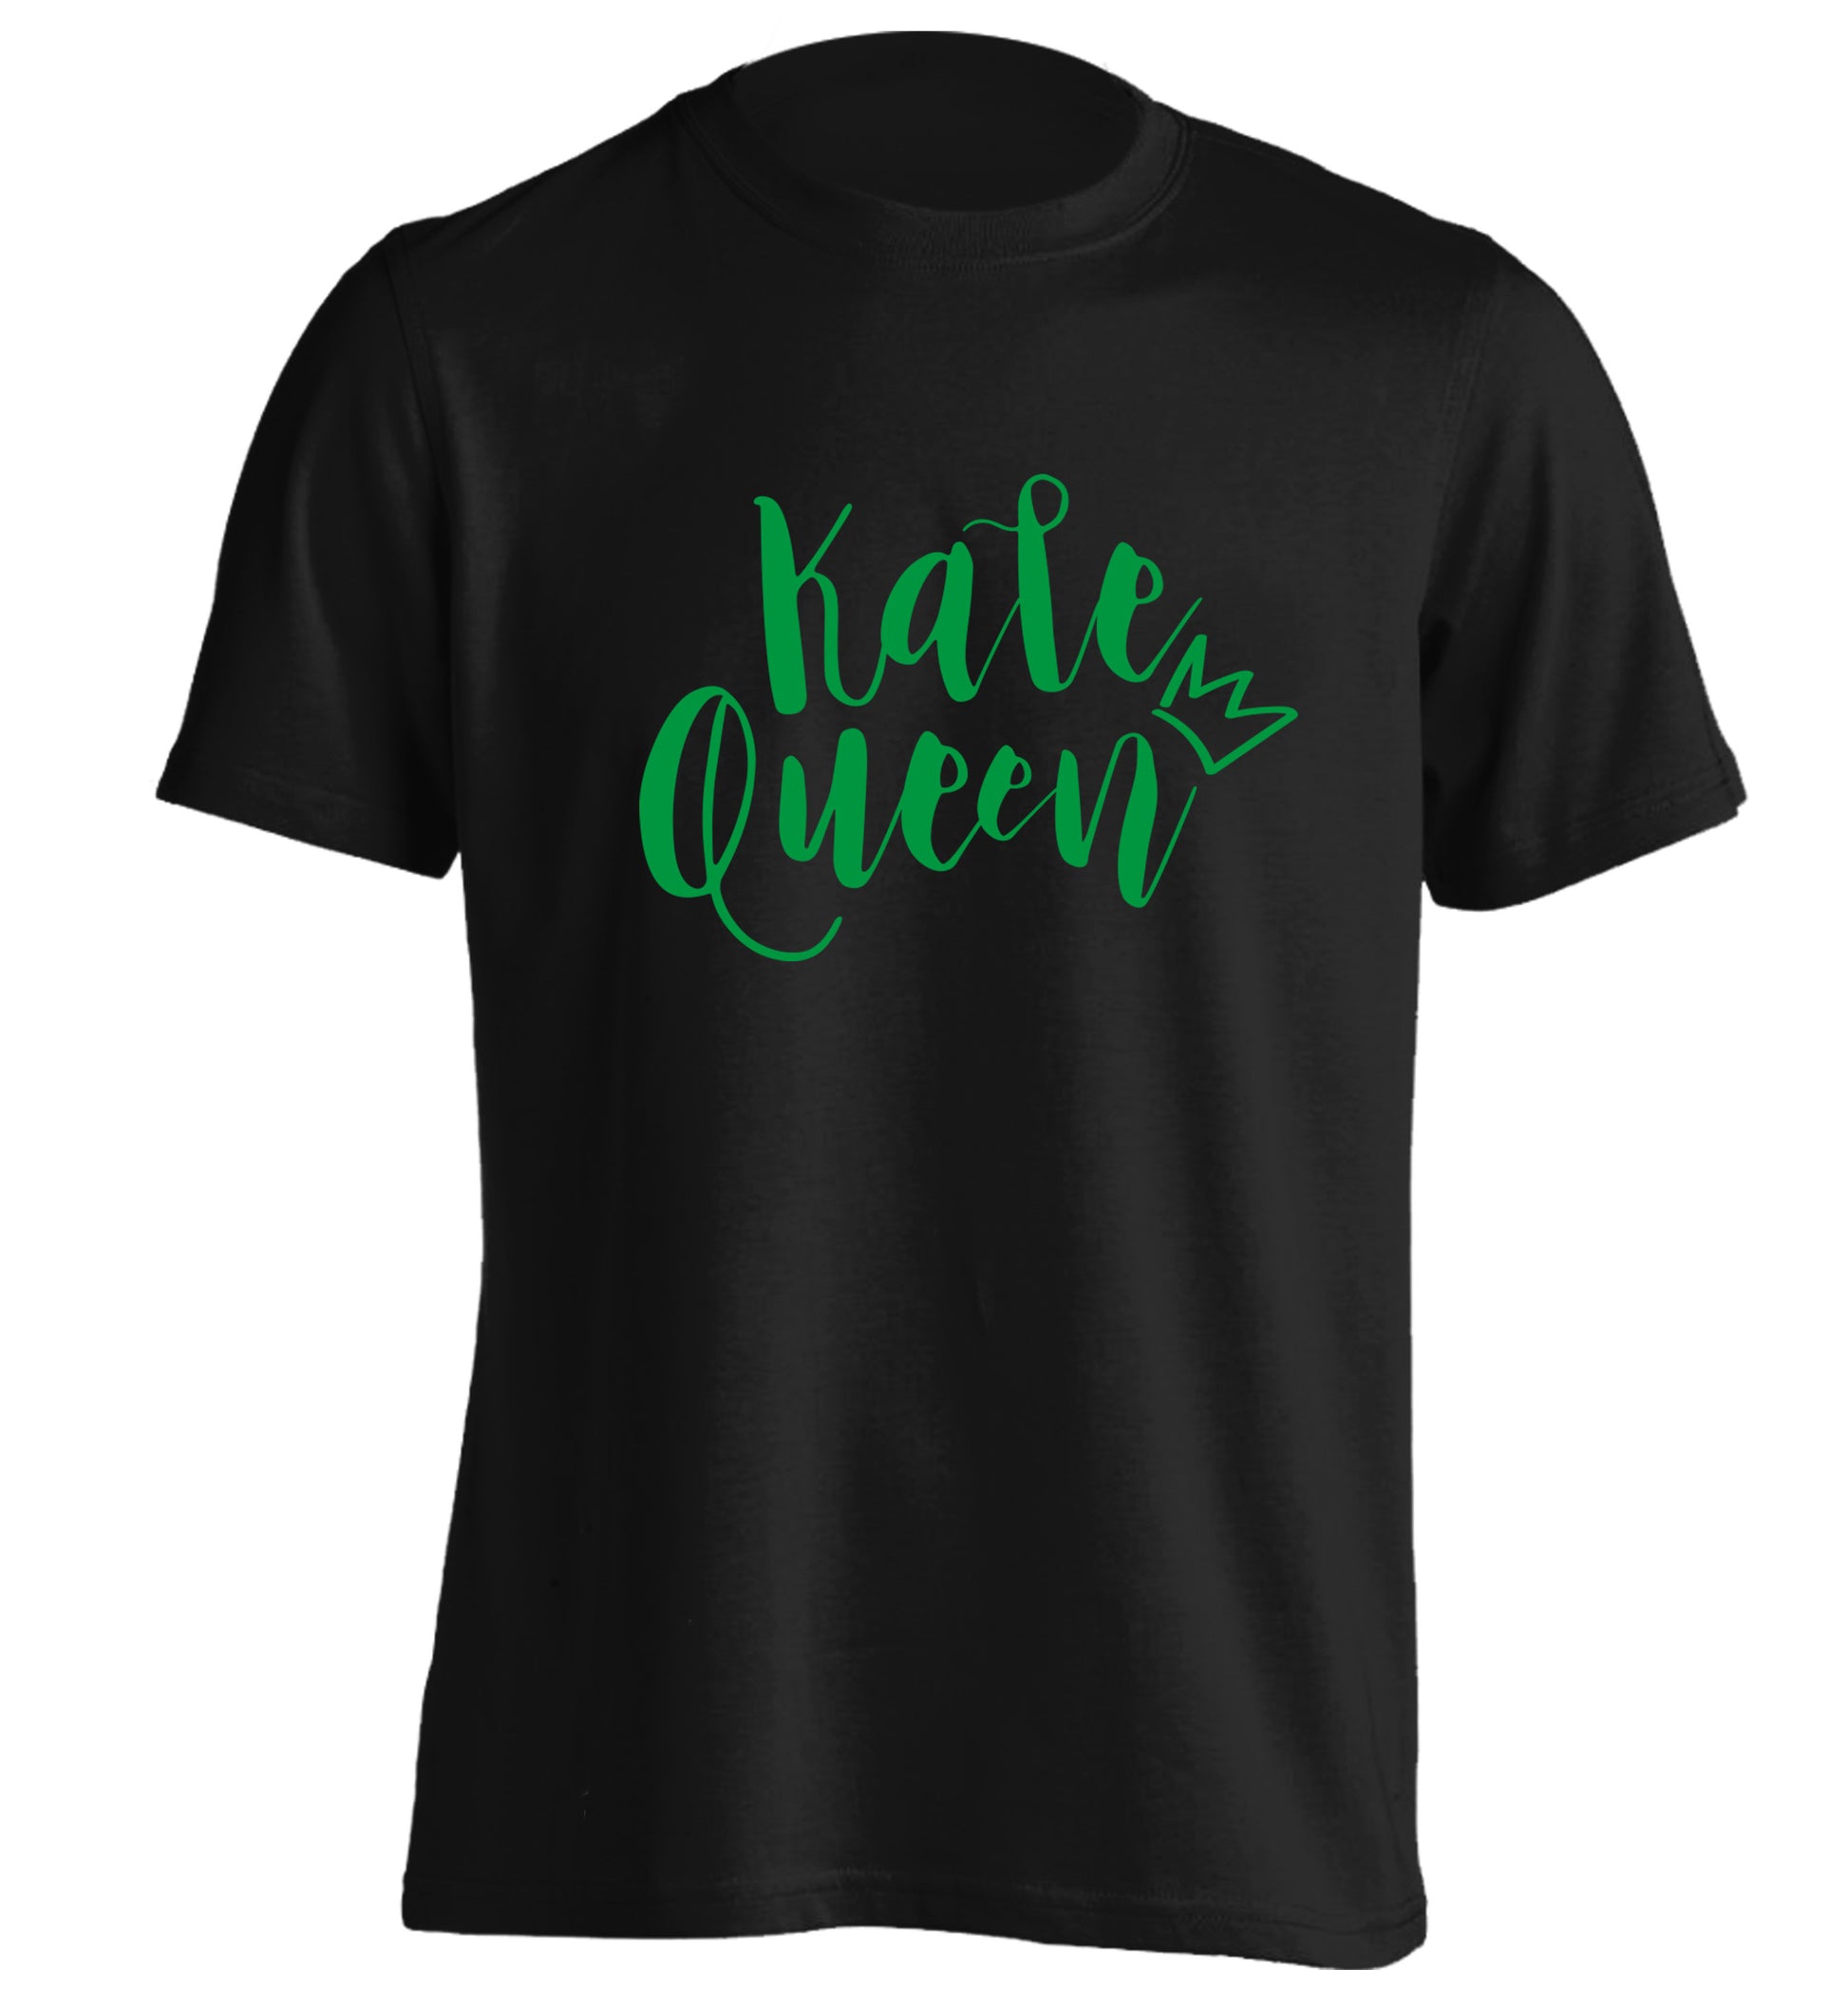 Kale Queen adults unisex black Tshirt 2XL